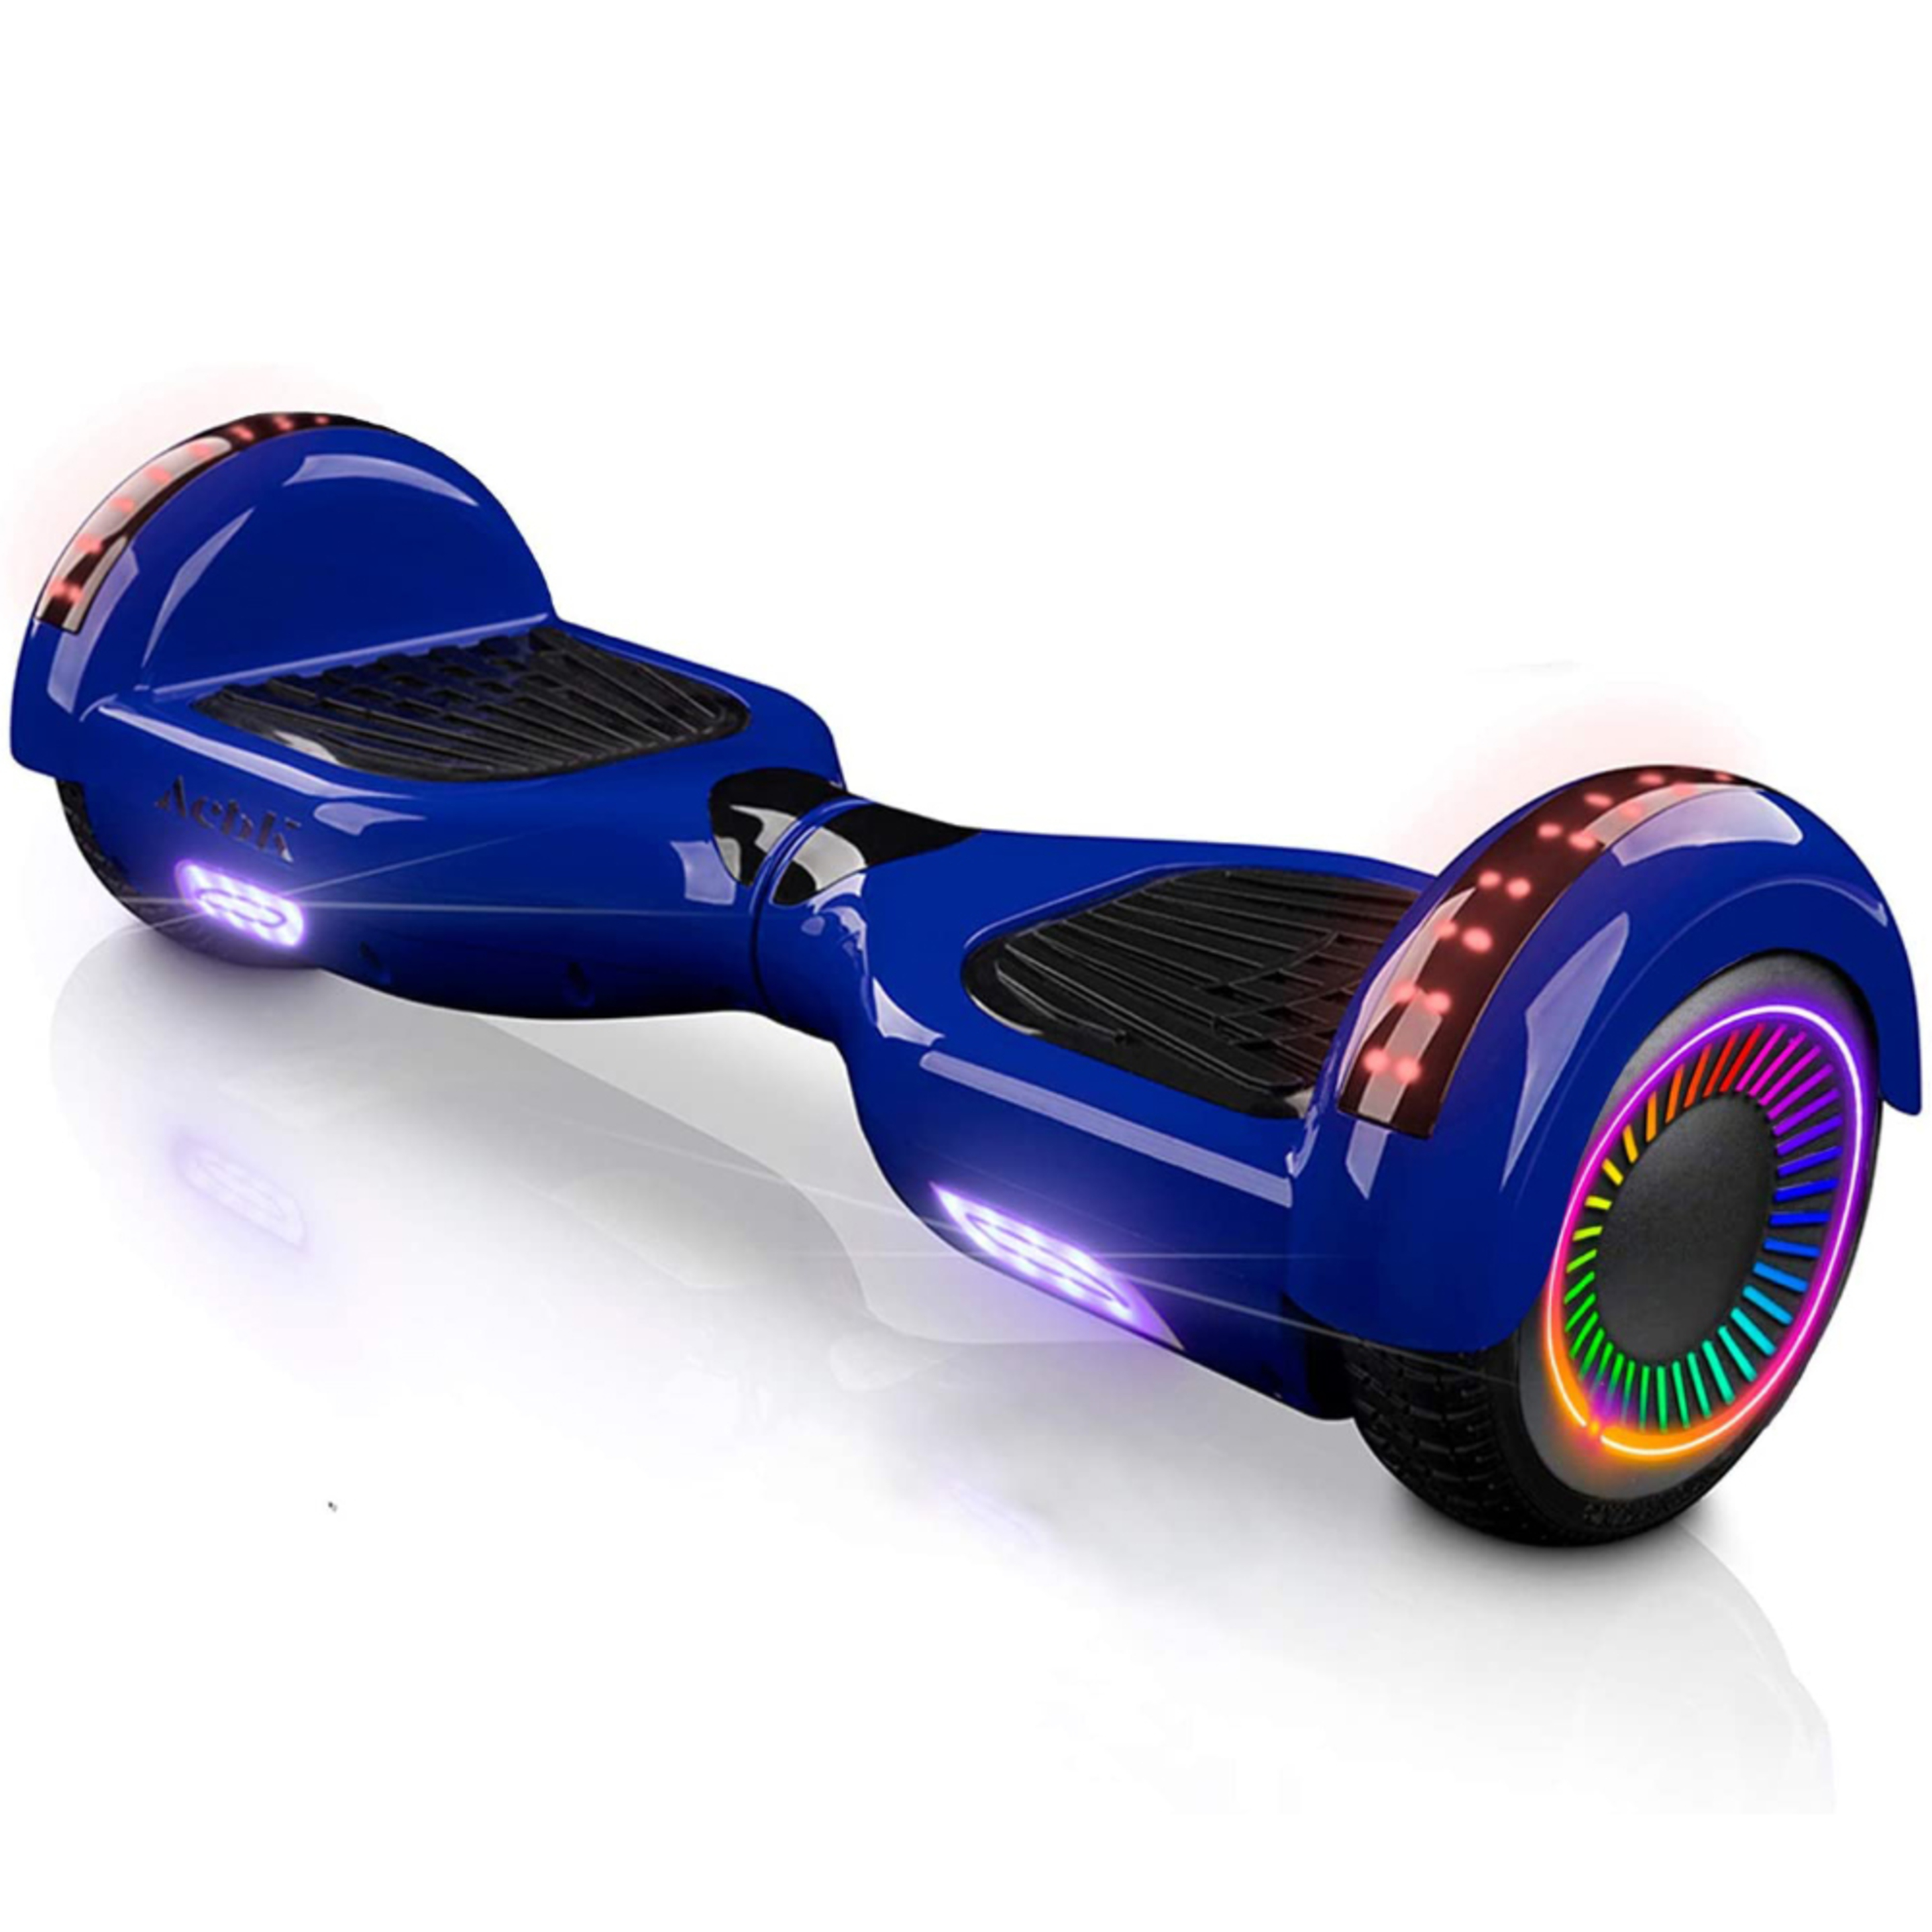 Acbk Hoverboard Con Bluetooth Ruedas Led 250w - Azul Oscuro - Hoverboard | Gtt  MKP